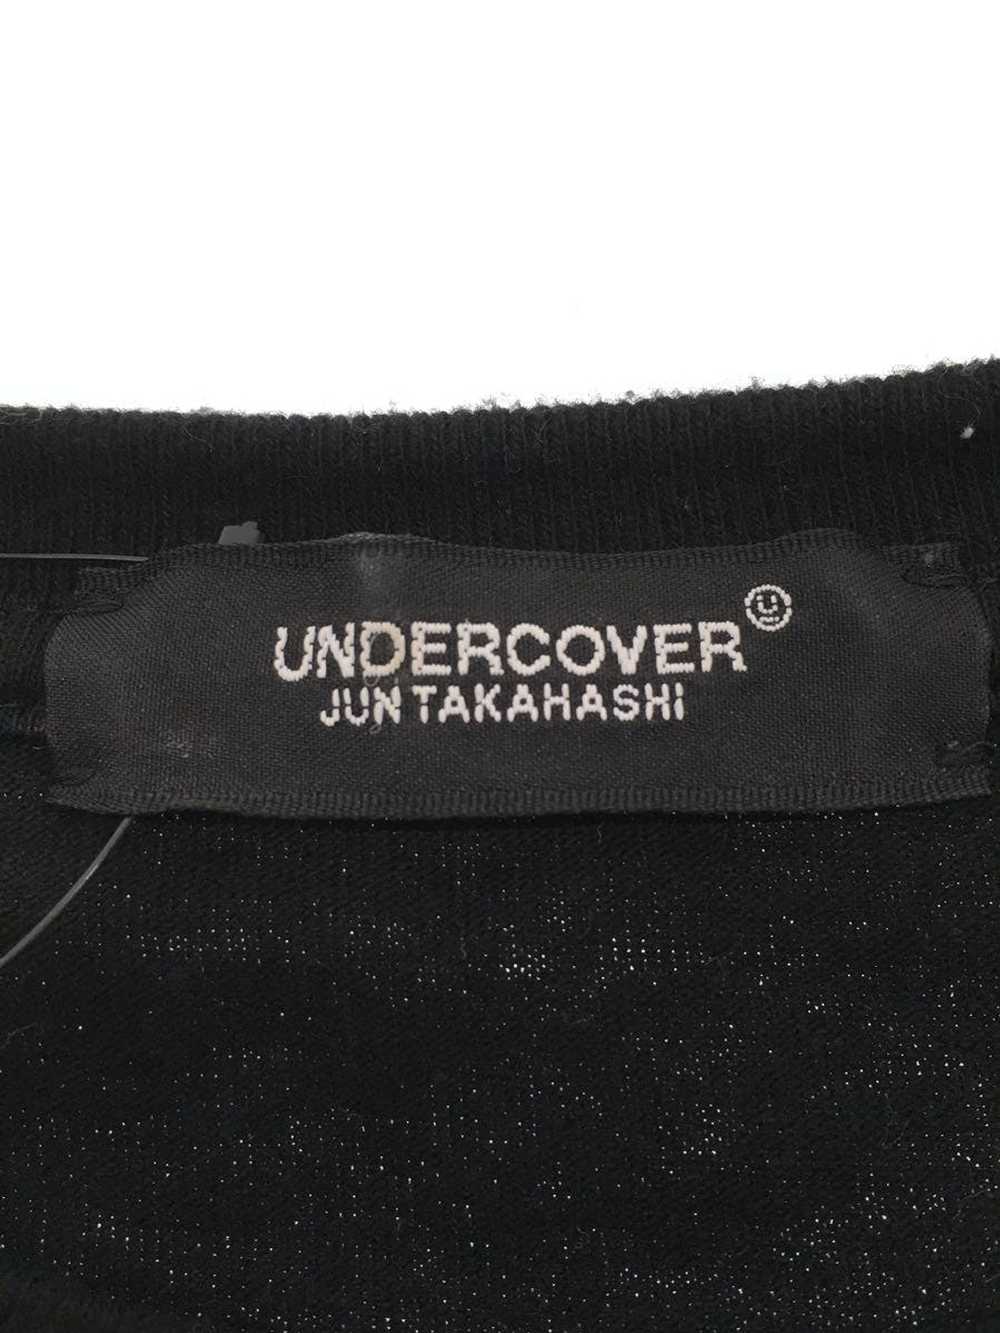 Undercover Short Sleeve T-Shirts Black Photo PSYC… - image 3